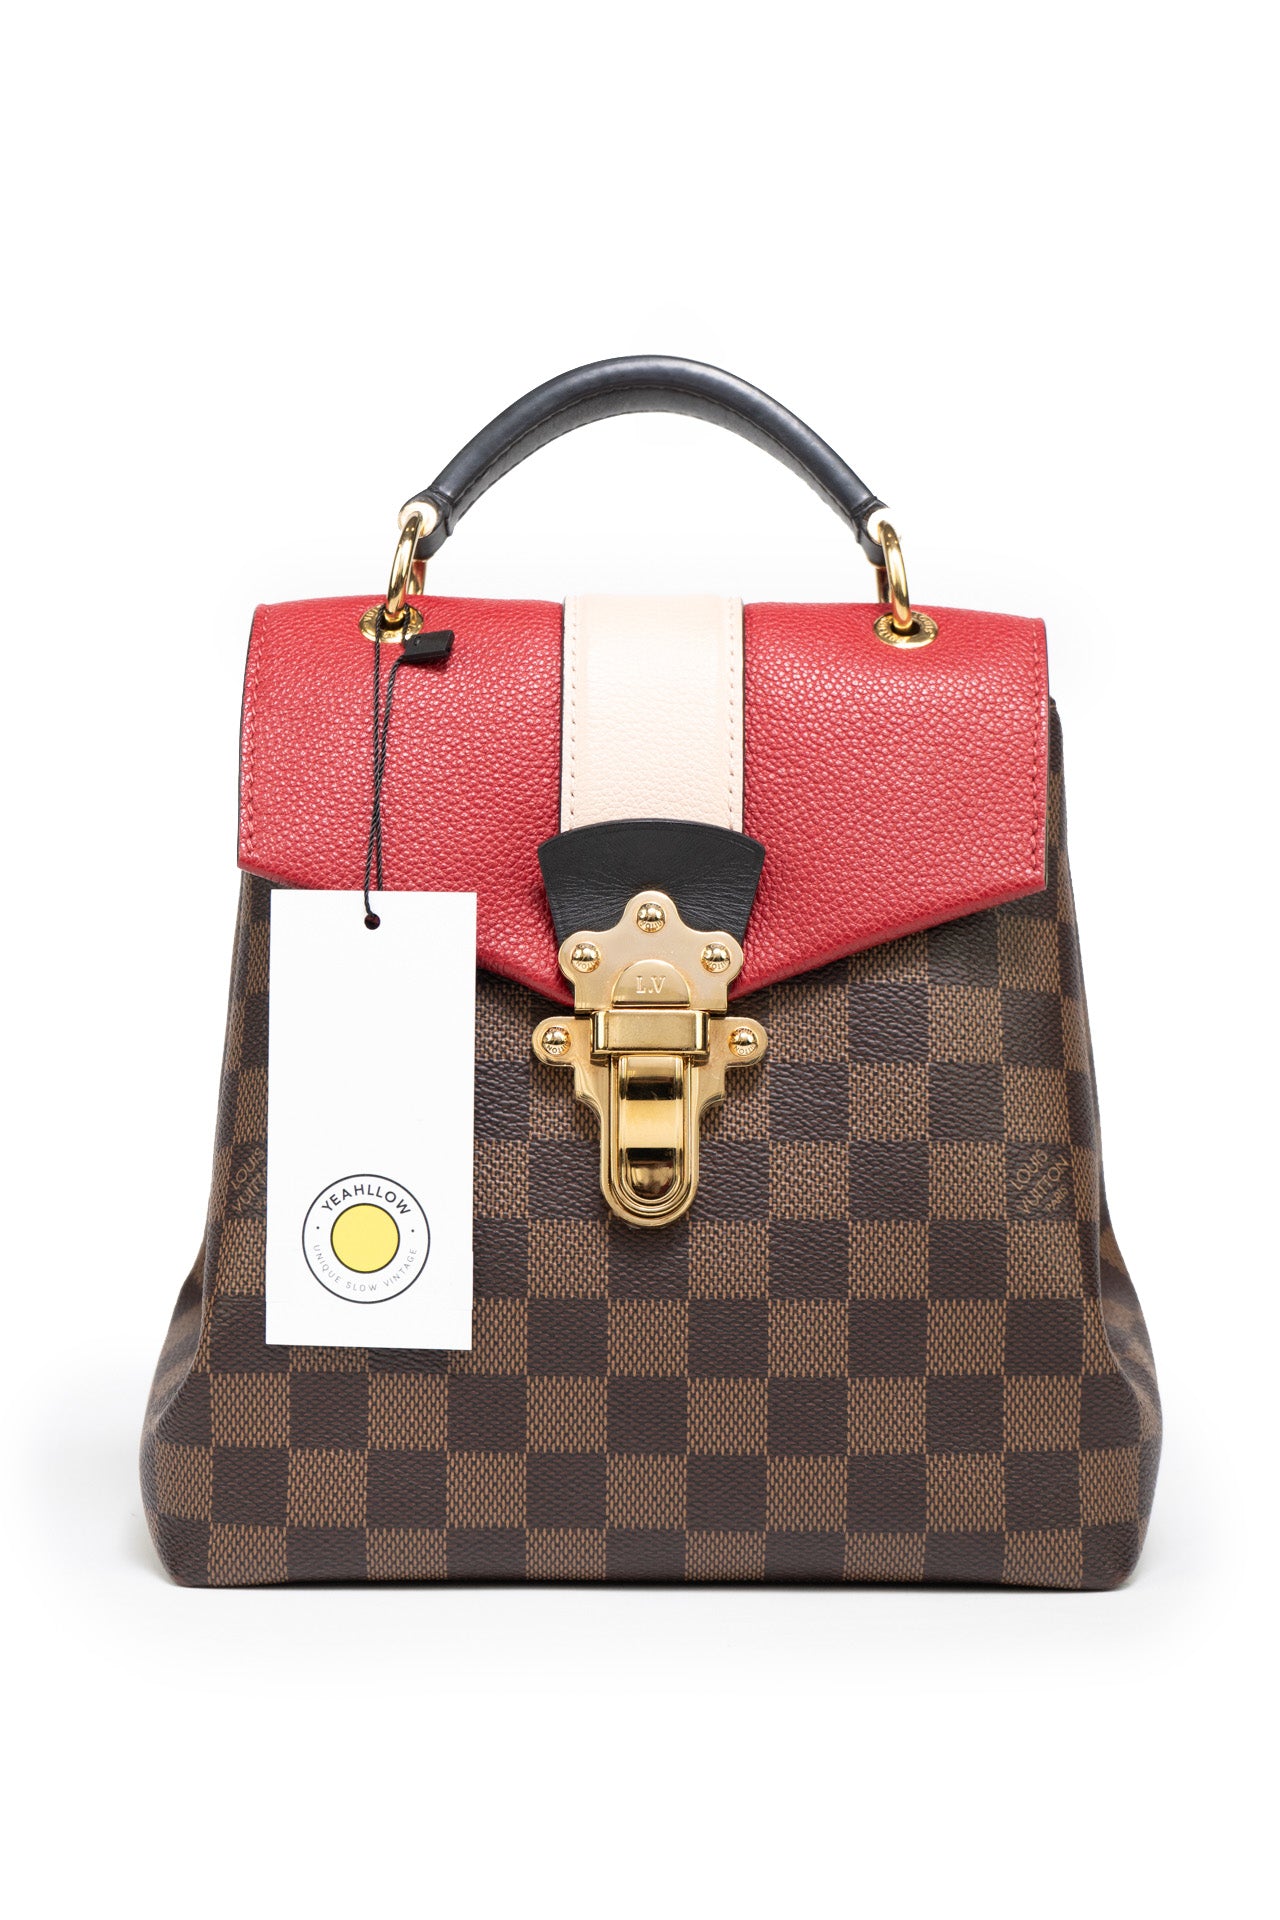 Louis Vuitton Clapton 4-Way Bag - backpack, satchel, crossbody